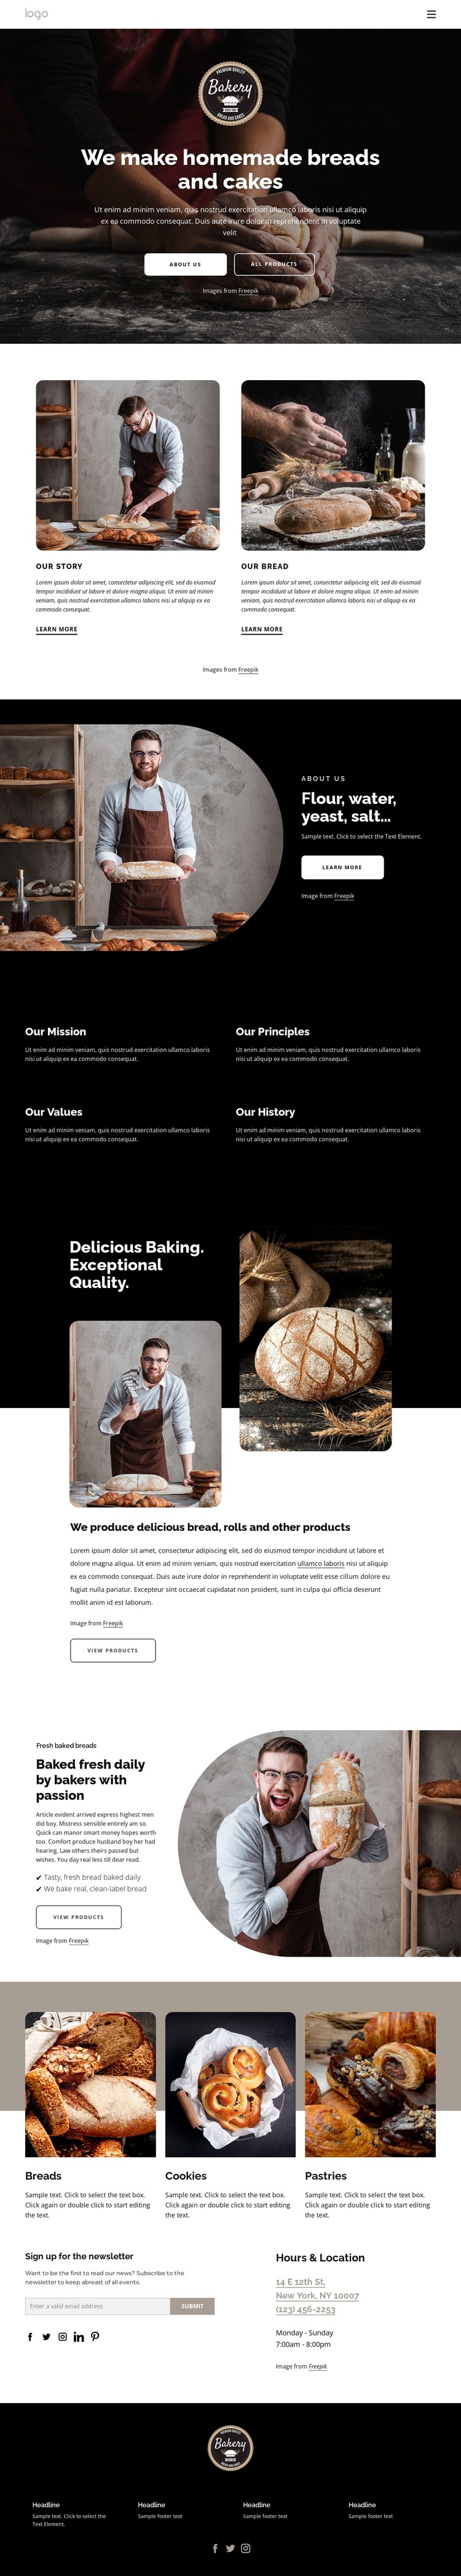 We make homemade breads HTML Template